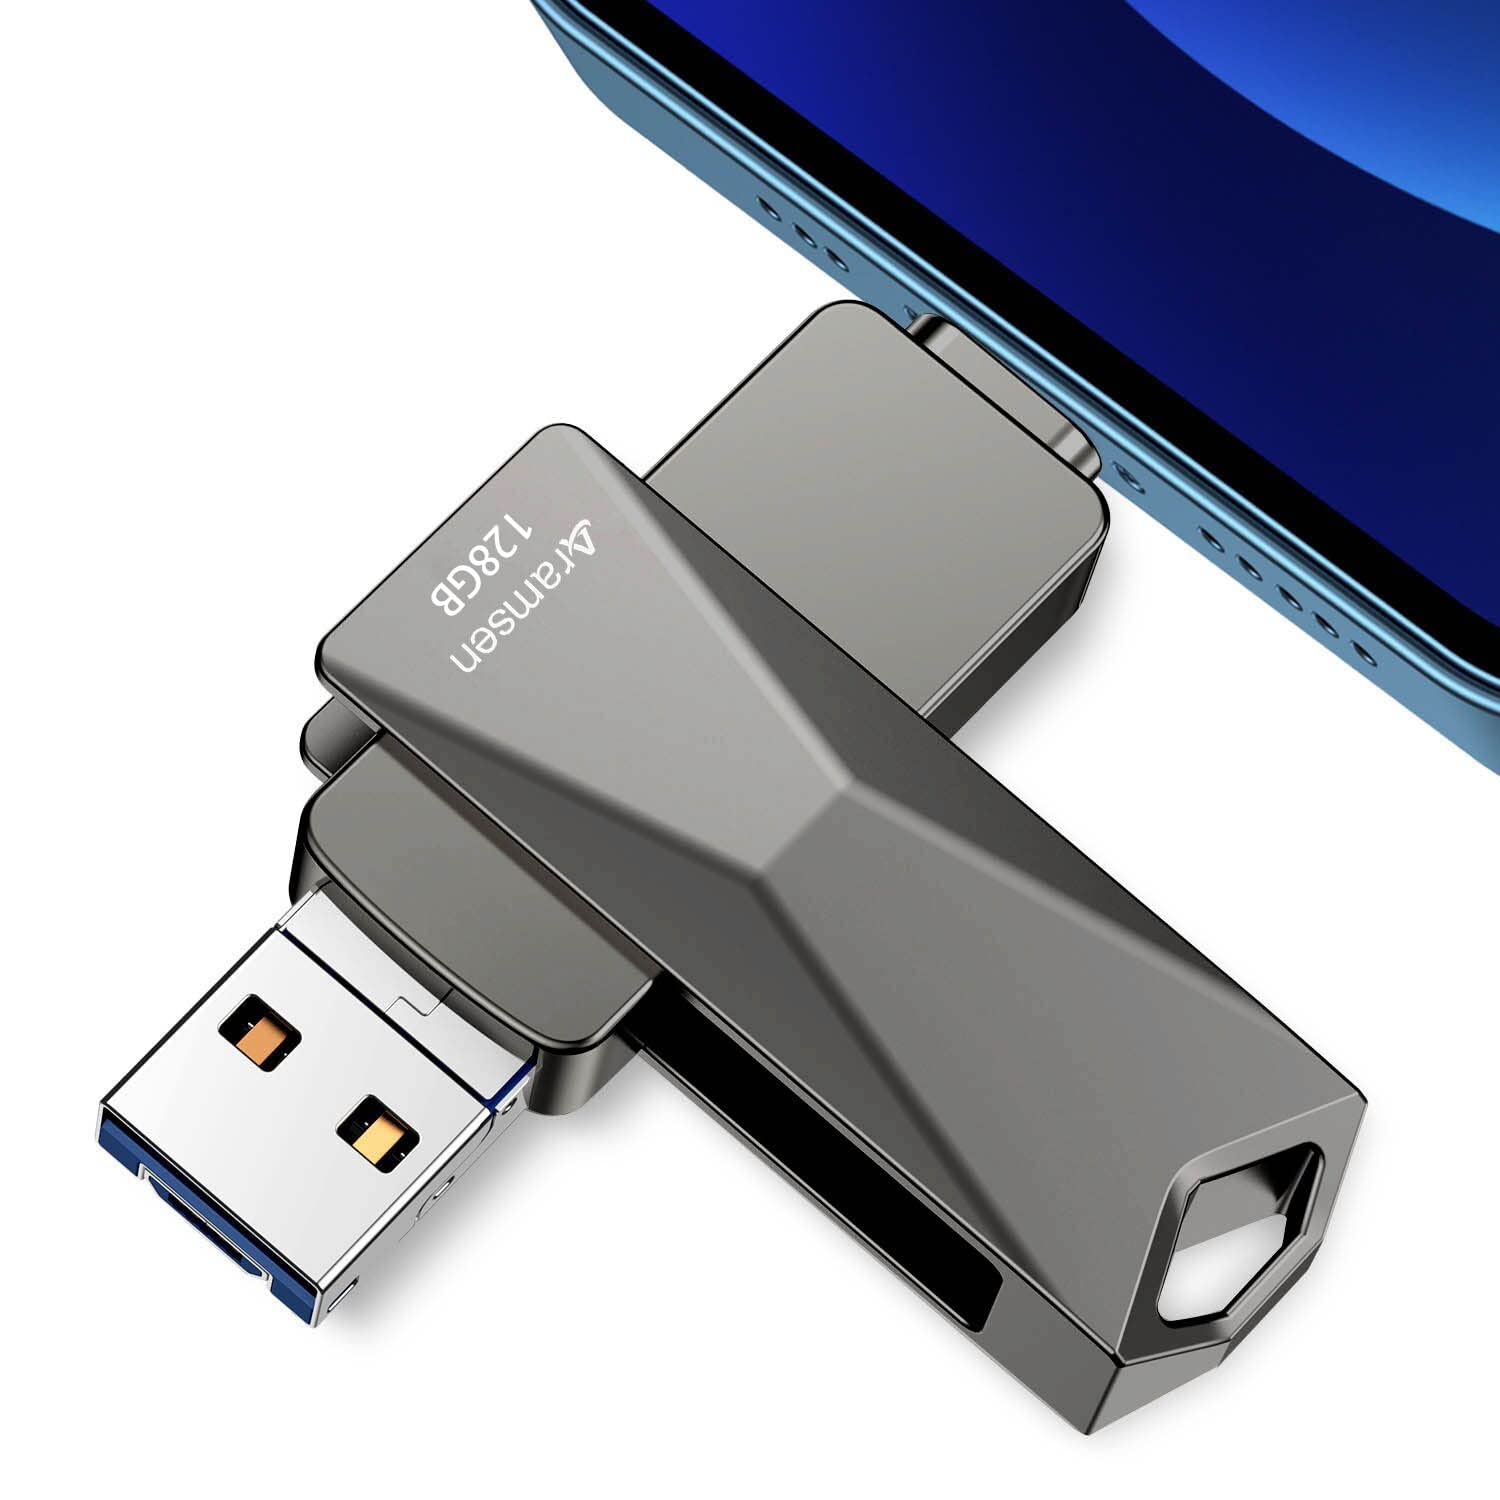 aramsen 128GB USB 3.0 Flash Drive External Storage for iPhone/iPad/Android/PC - Black